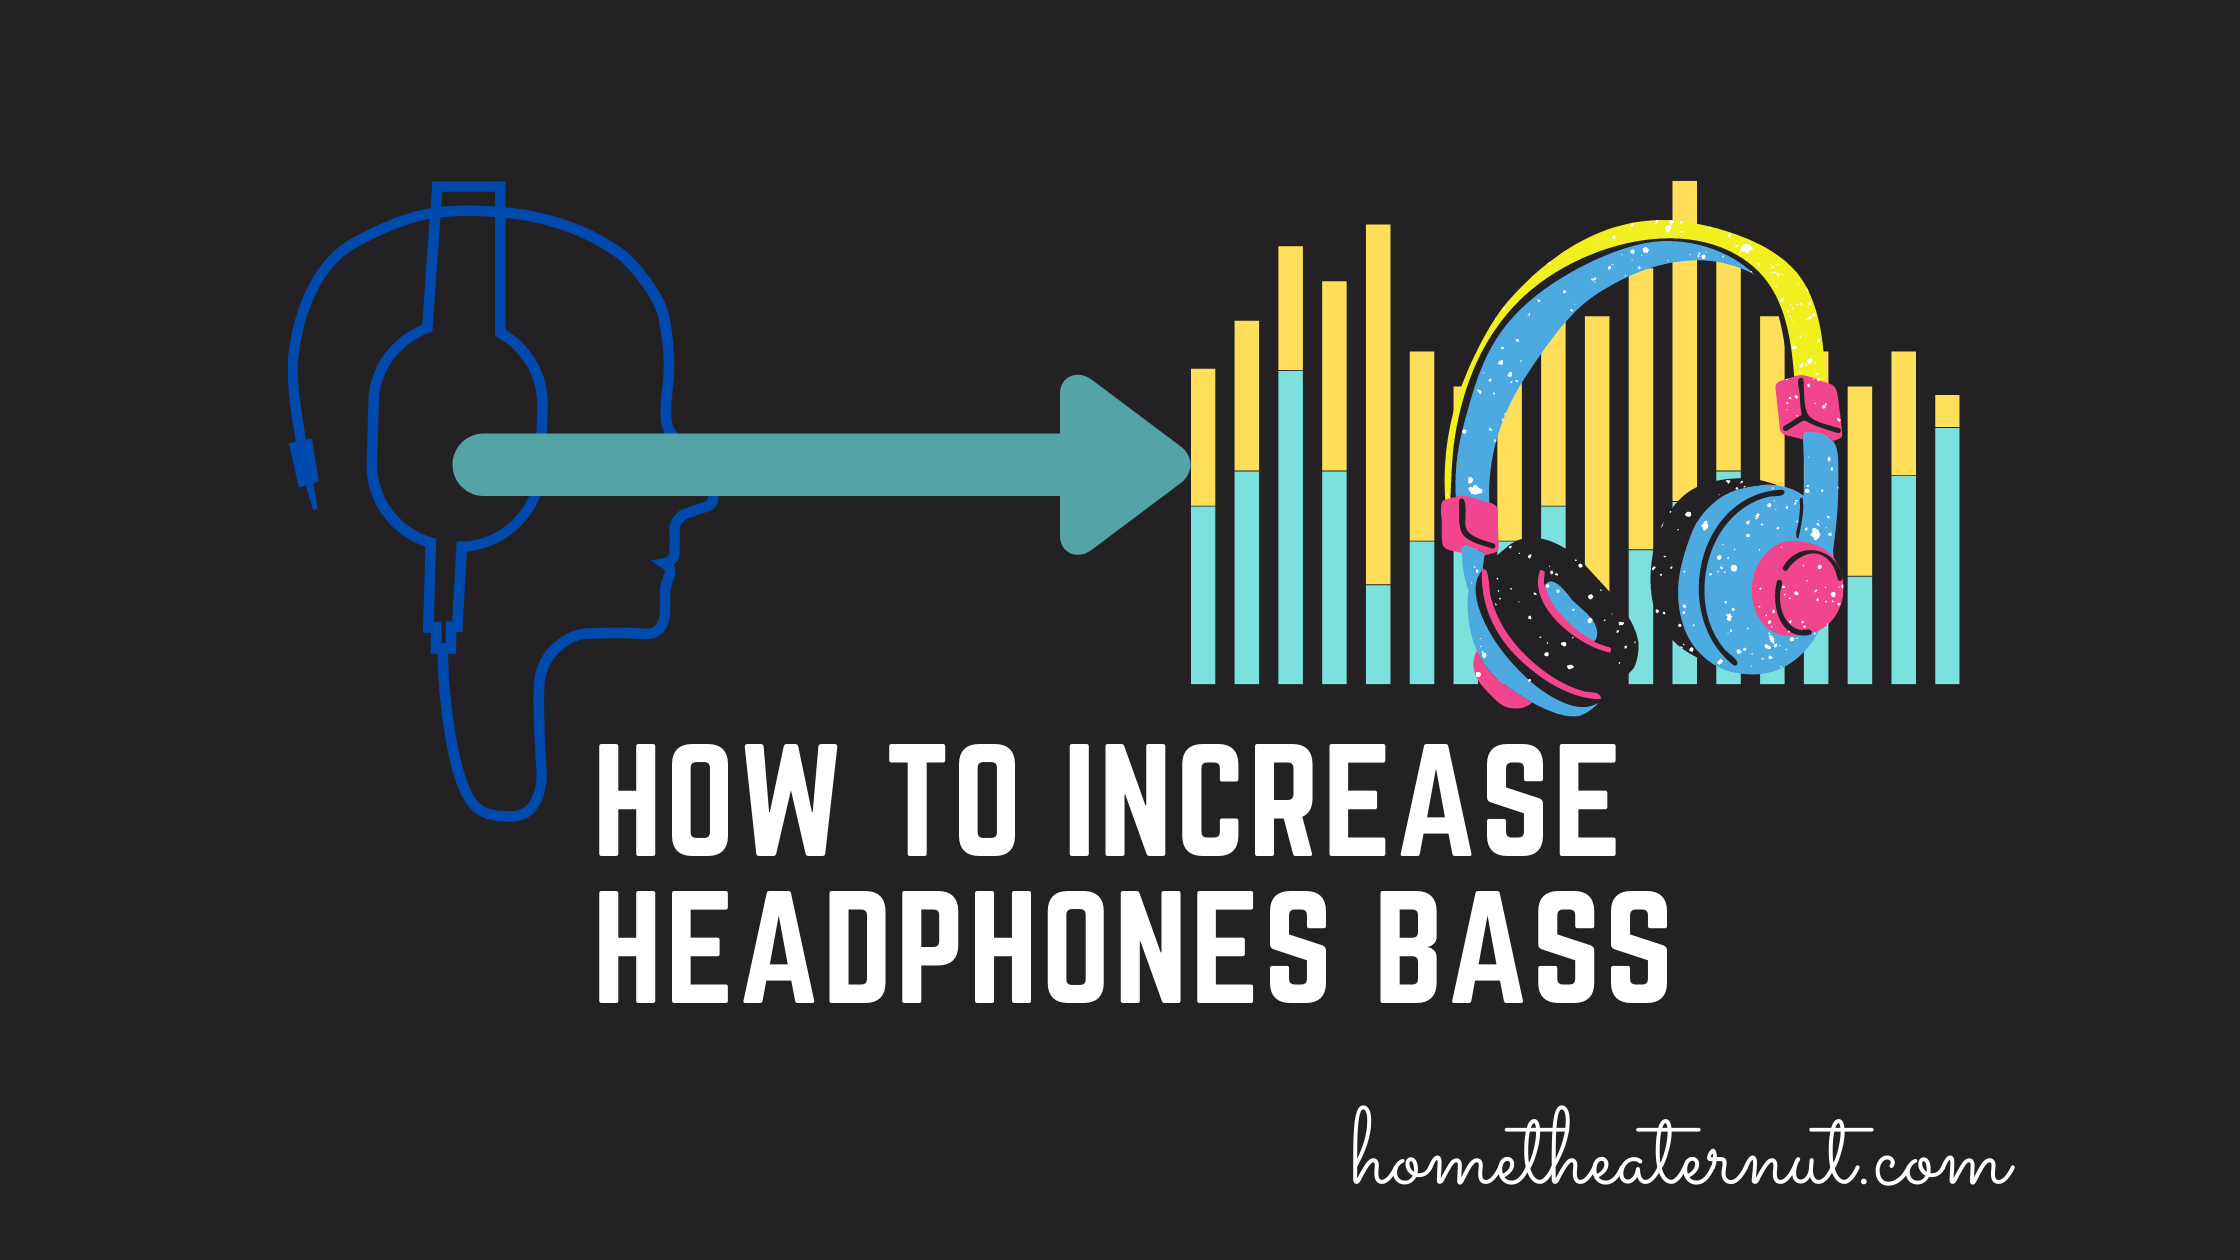 How to Increase Headphones Bass